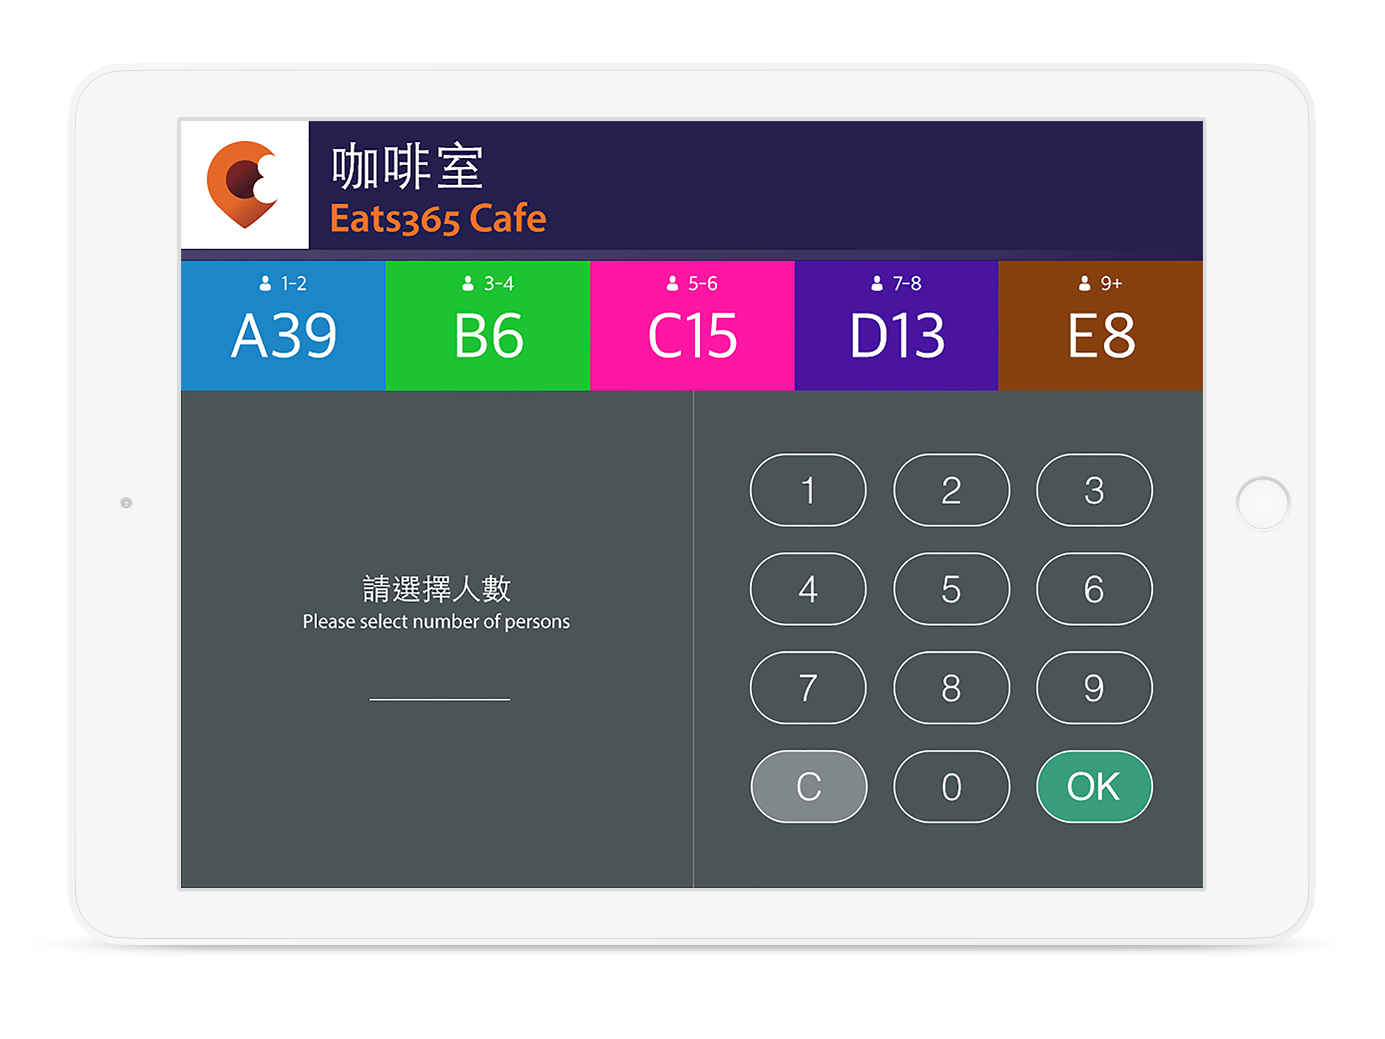 Part of Eats365’s Queue Ticket Kiosk user interface